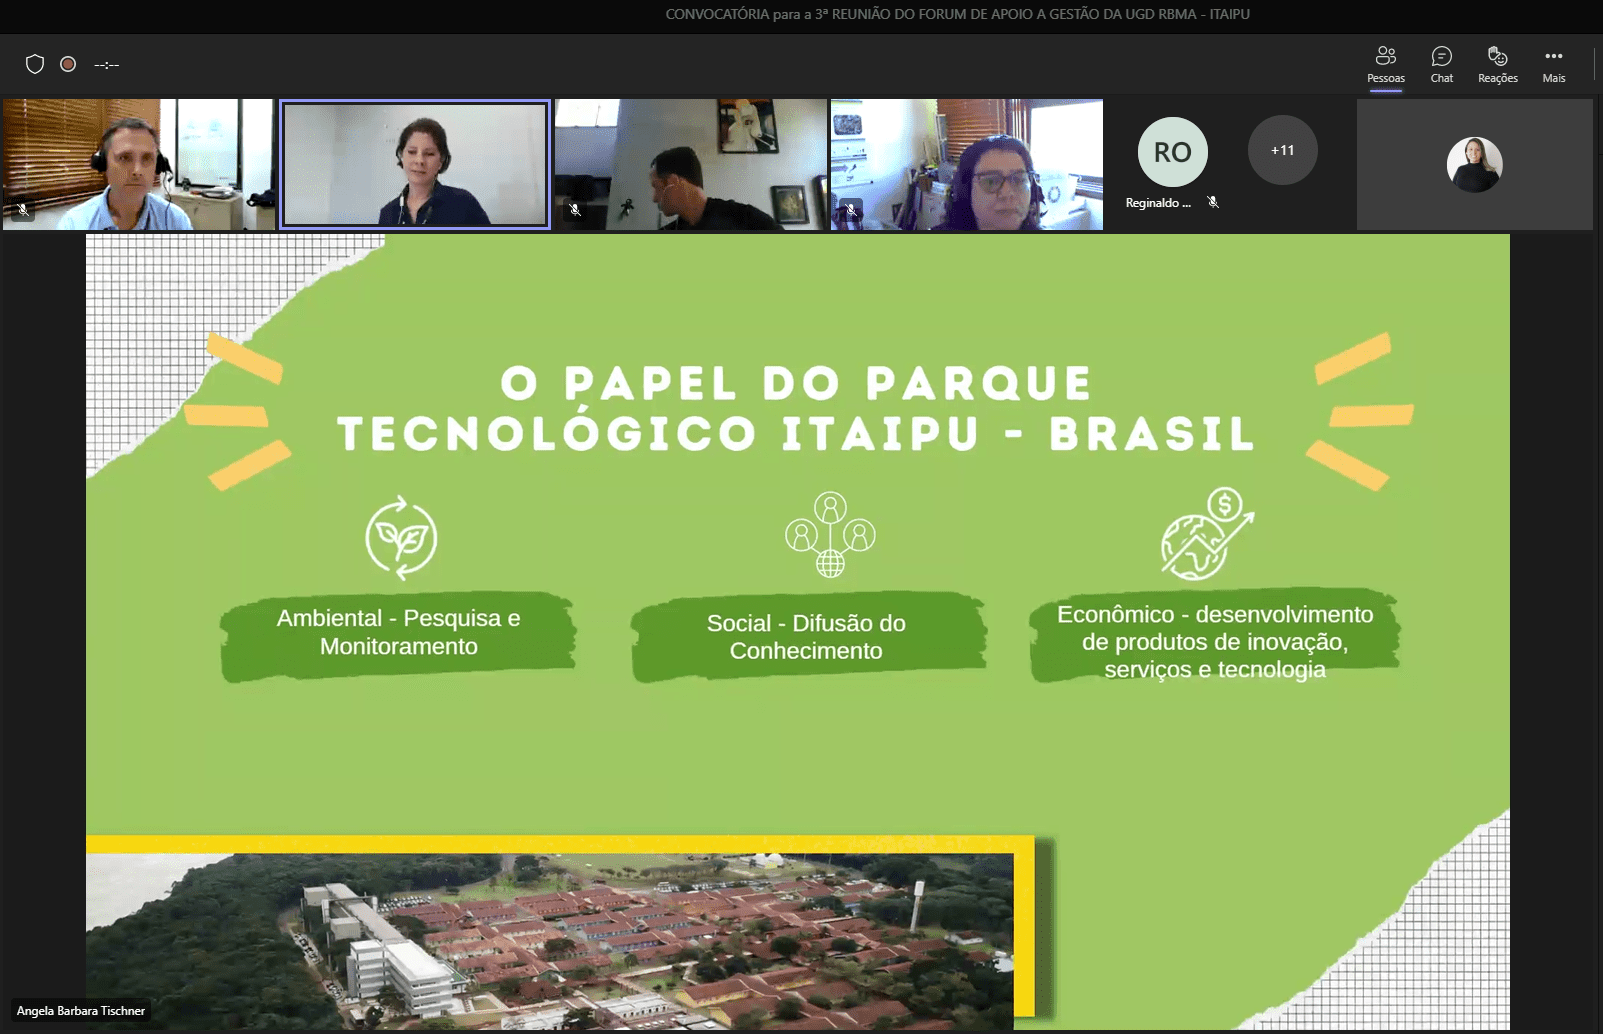 Acoes de sustentabilidade do Parque Tecnologico Itaipu